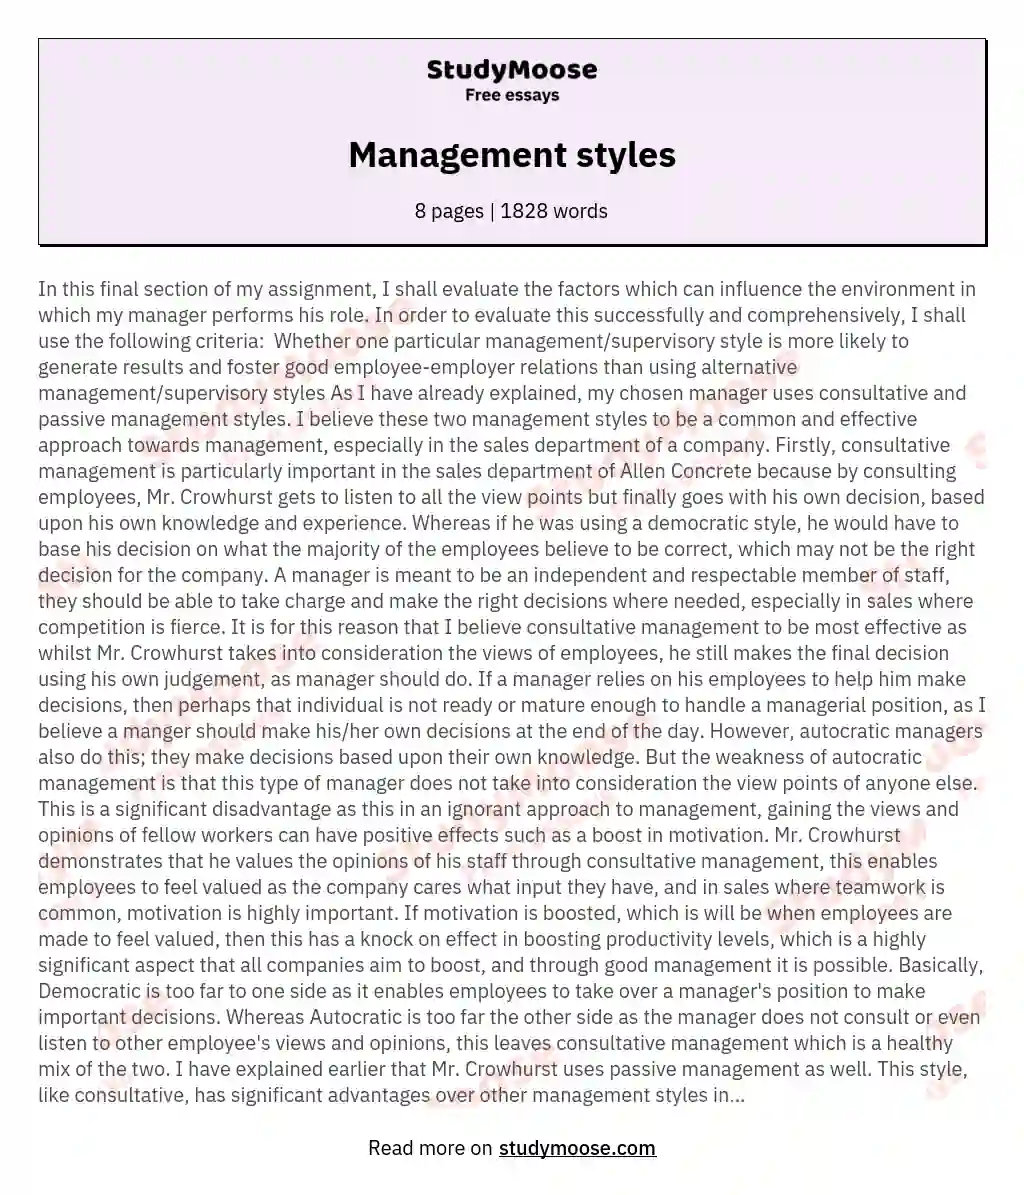 Management styles essay